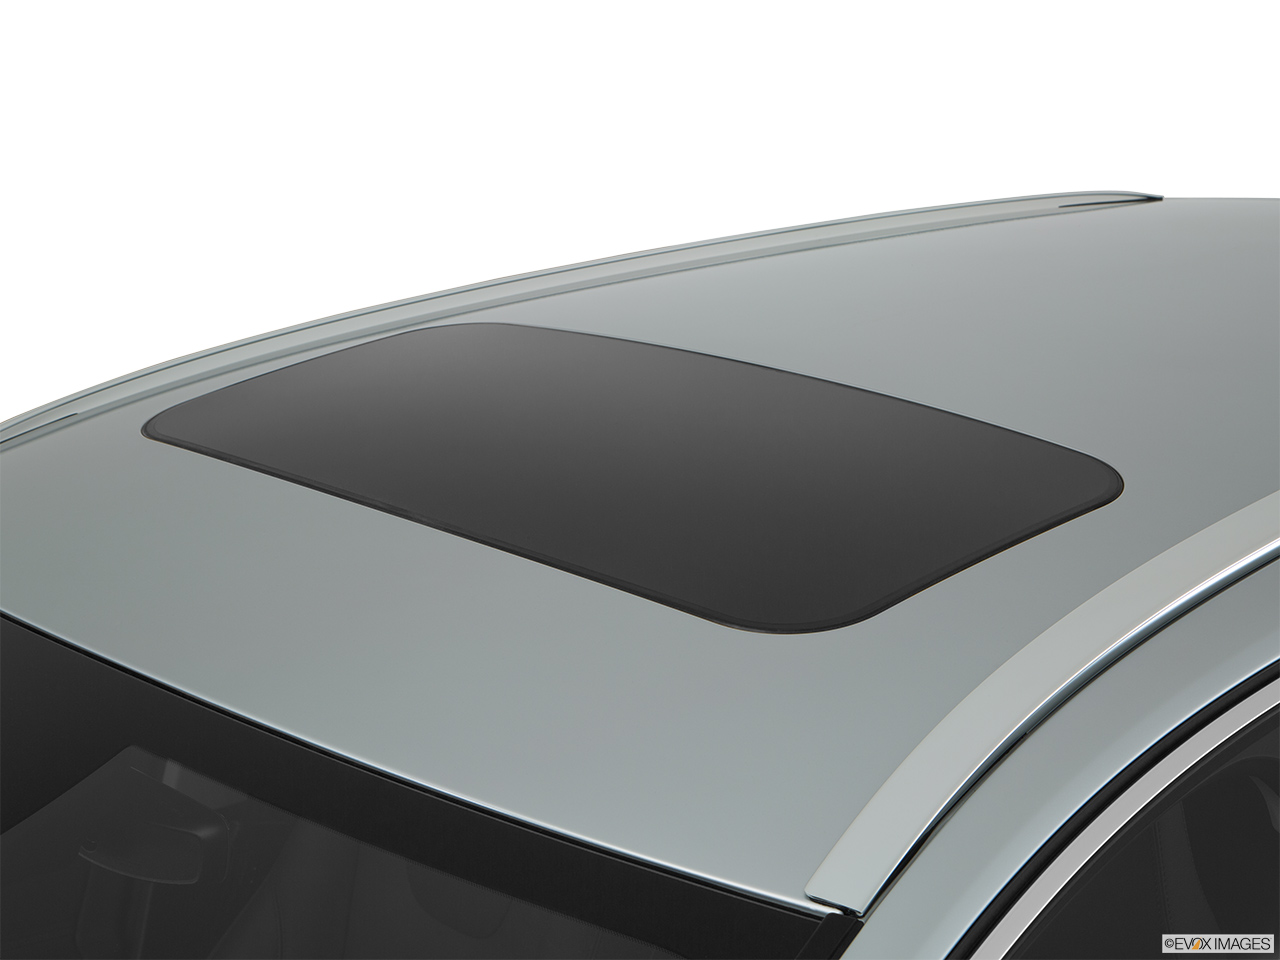 2016 Volvo V60 T5 Drive-E FWD Premier Sunroof/moonroof. 